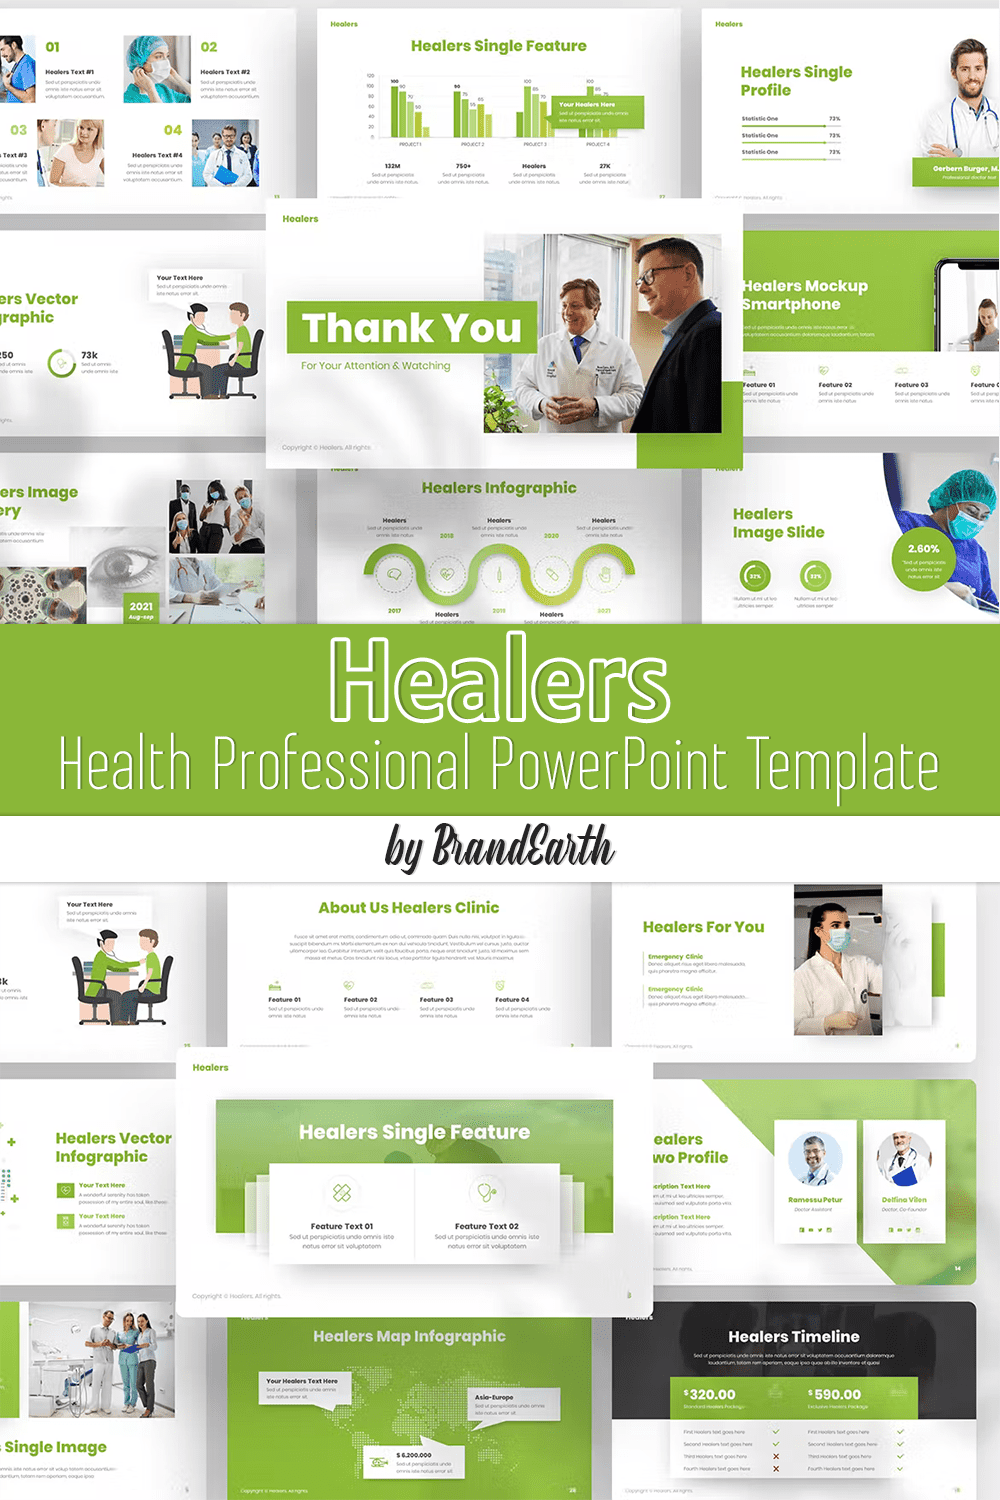 Healer Health Professional PowerPoint Template - Pinterest.